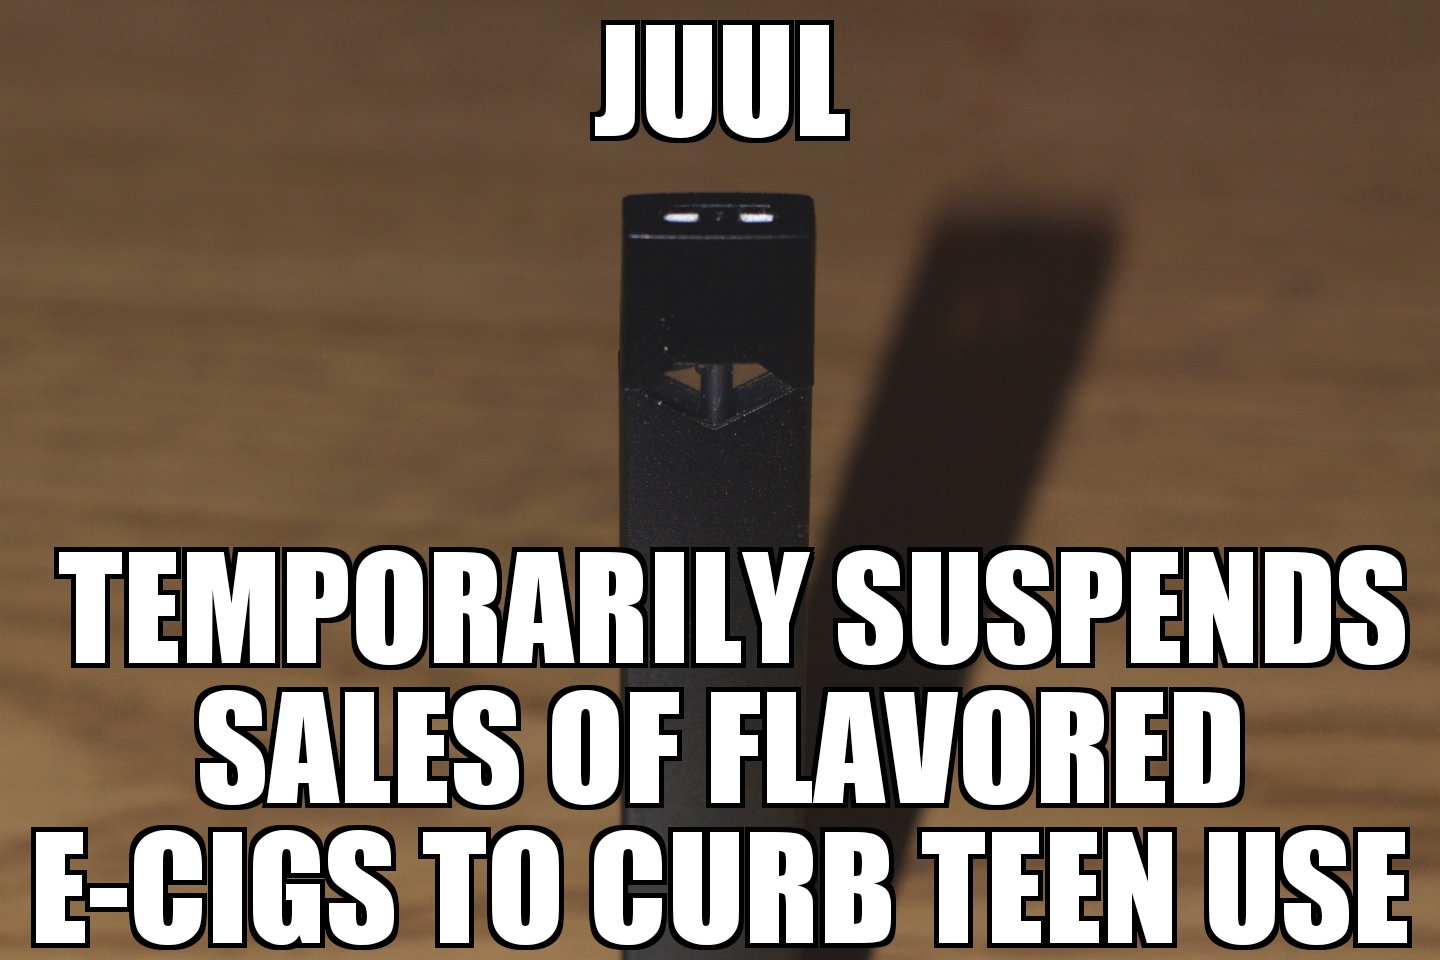 JUUL halts flavored e-cig sales